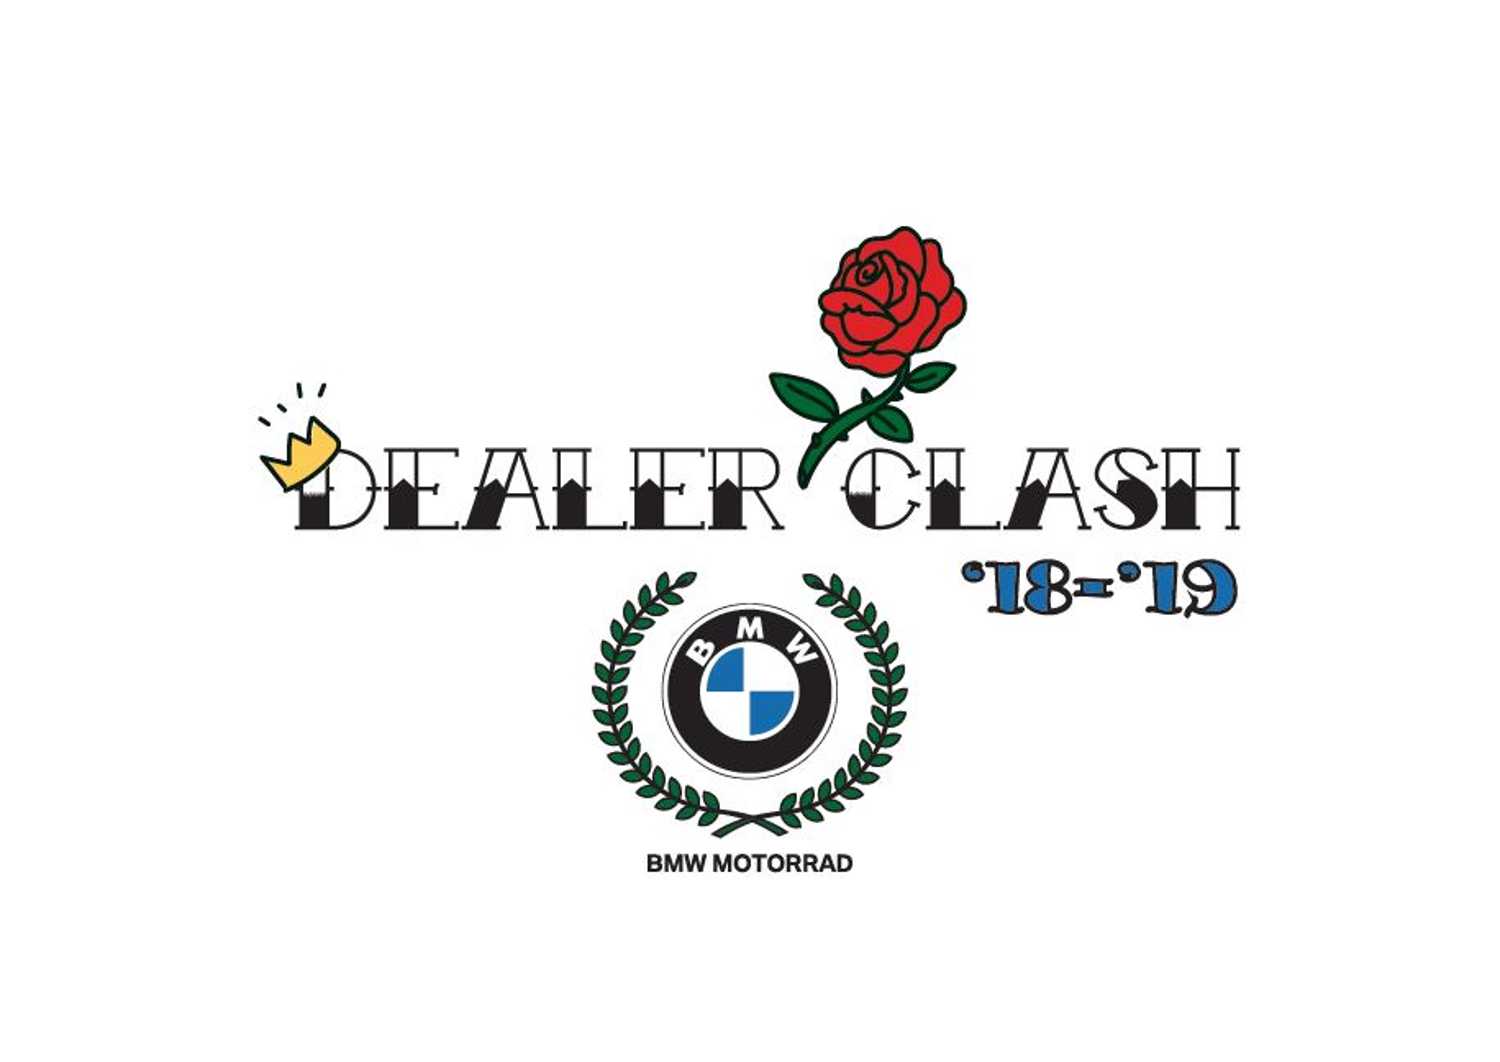 BMW Motorrad Dealer Clash 2019 - Logo (02/2019)